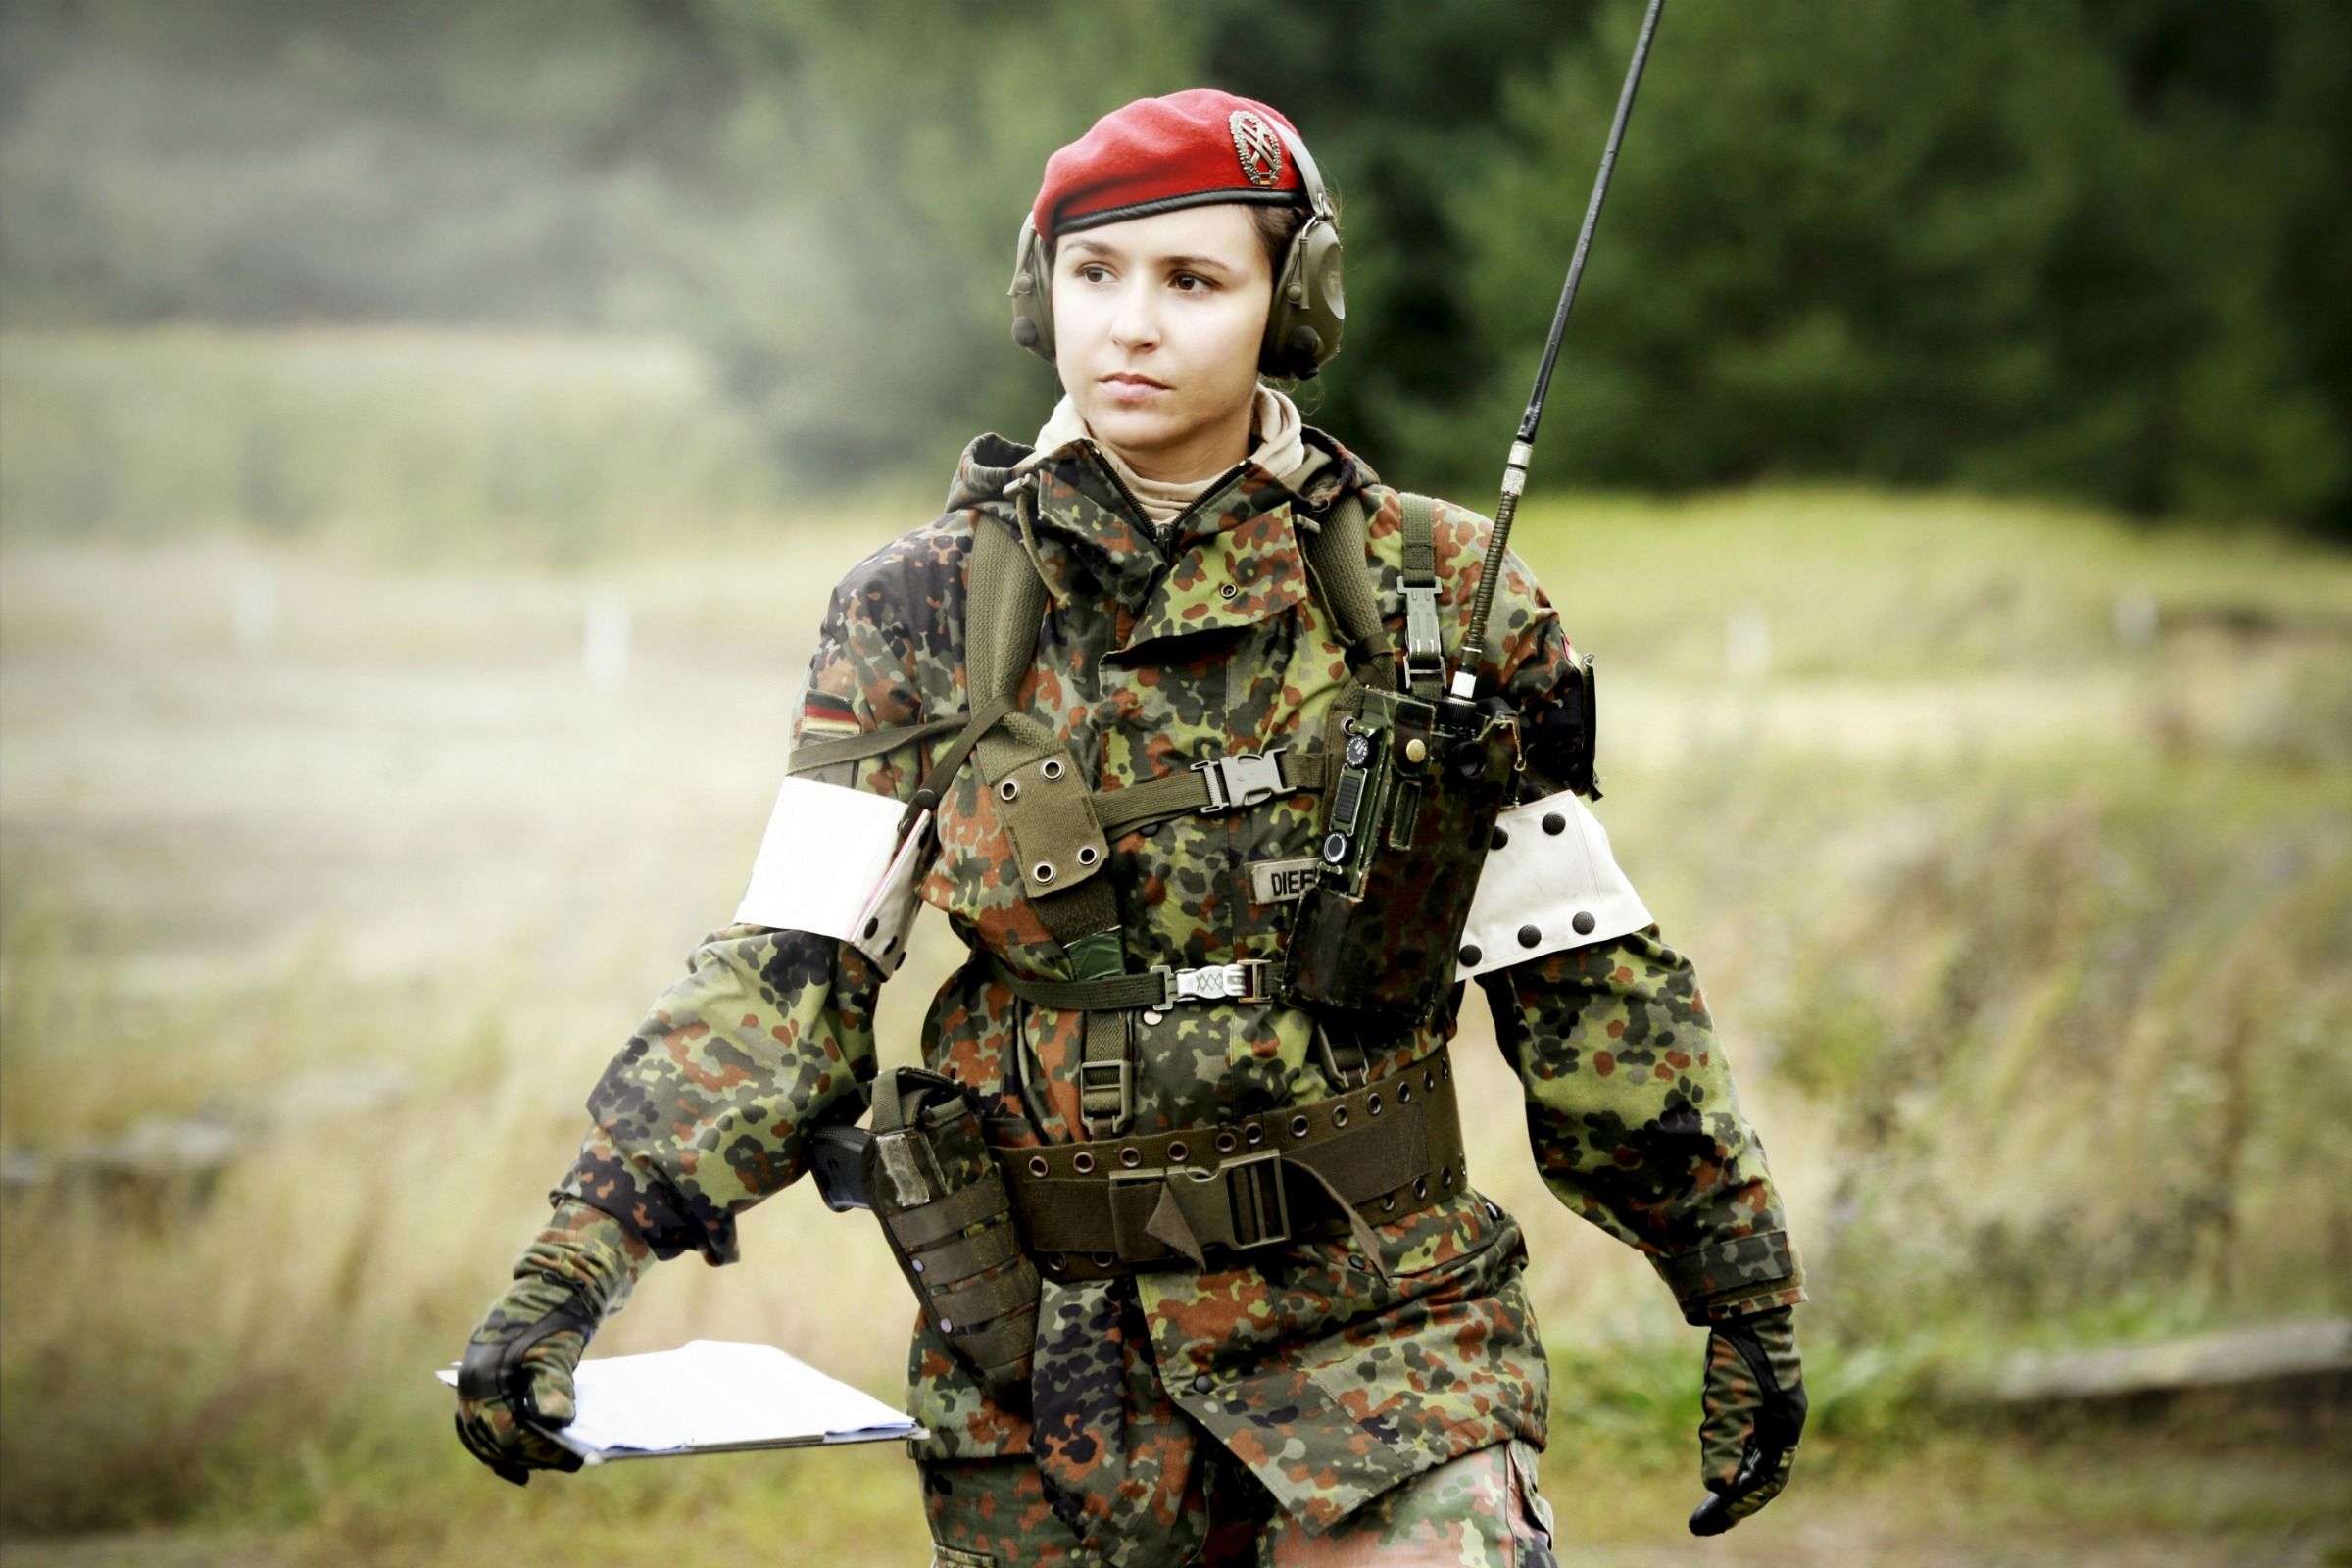 Female Soldier Wallpaper Free .wallpaperaccess.com